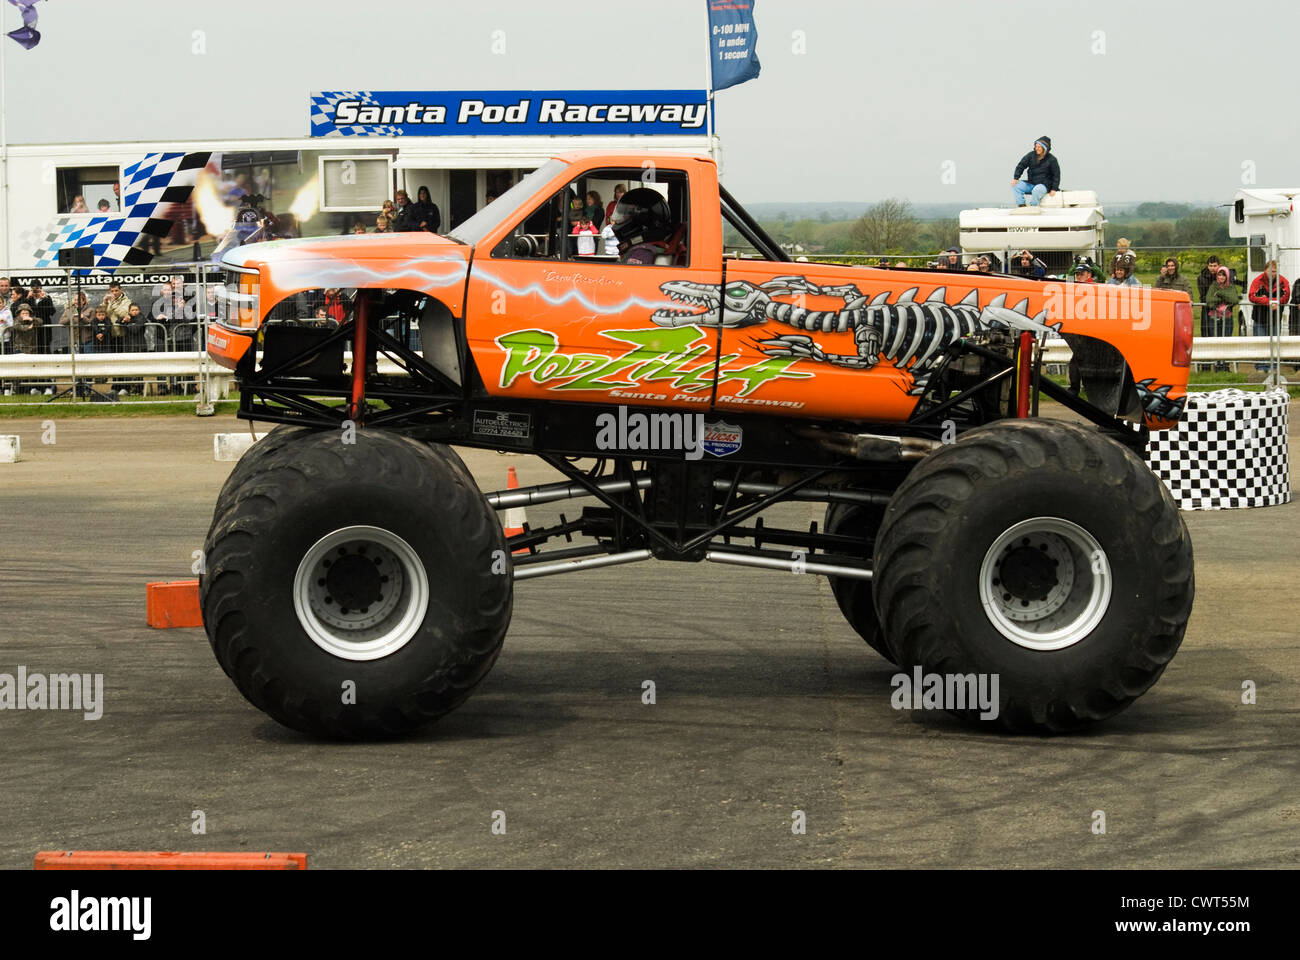 A Monster truck named 'Swamp Thing' at a show at Santa Pod raceway. Stock Photo